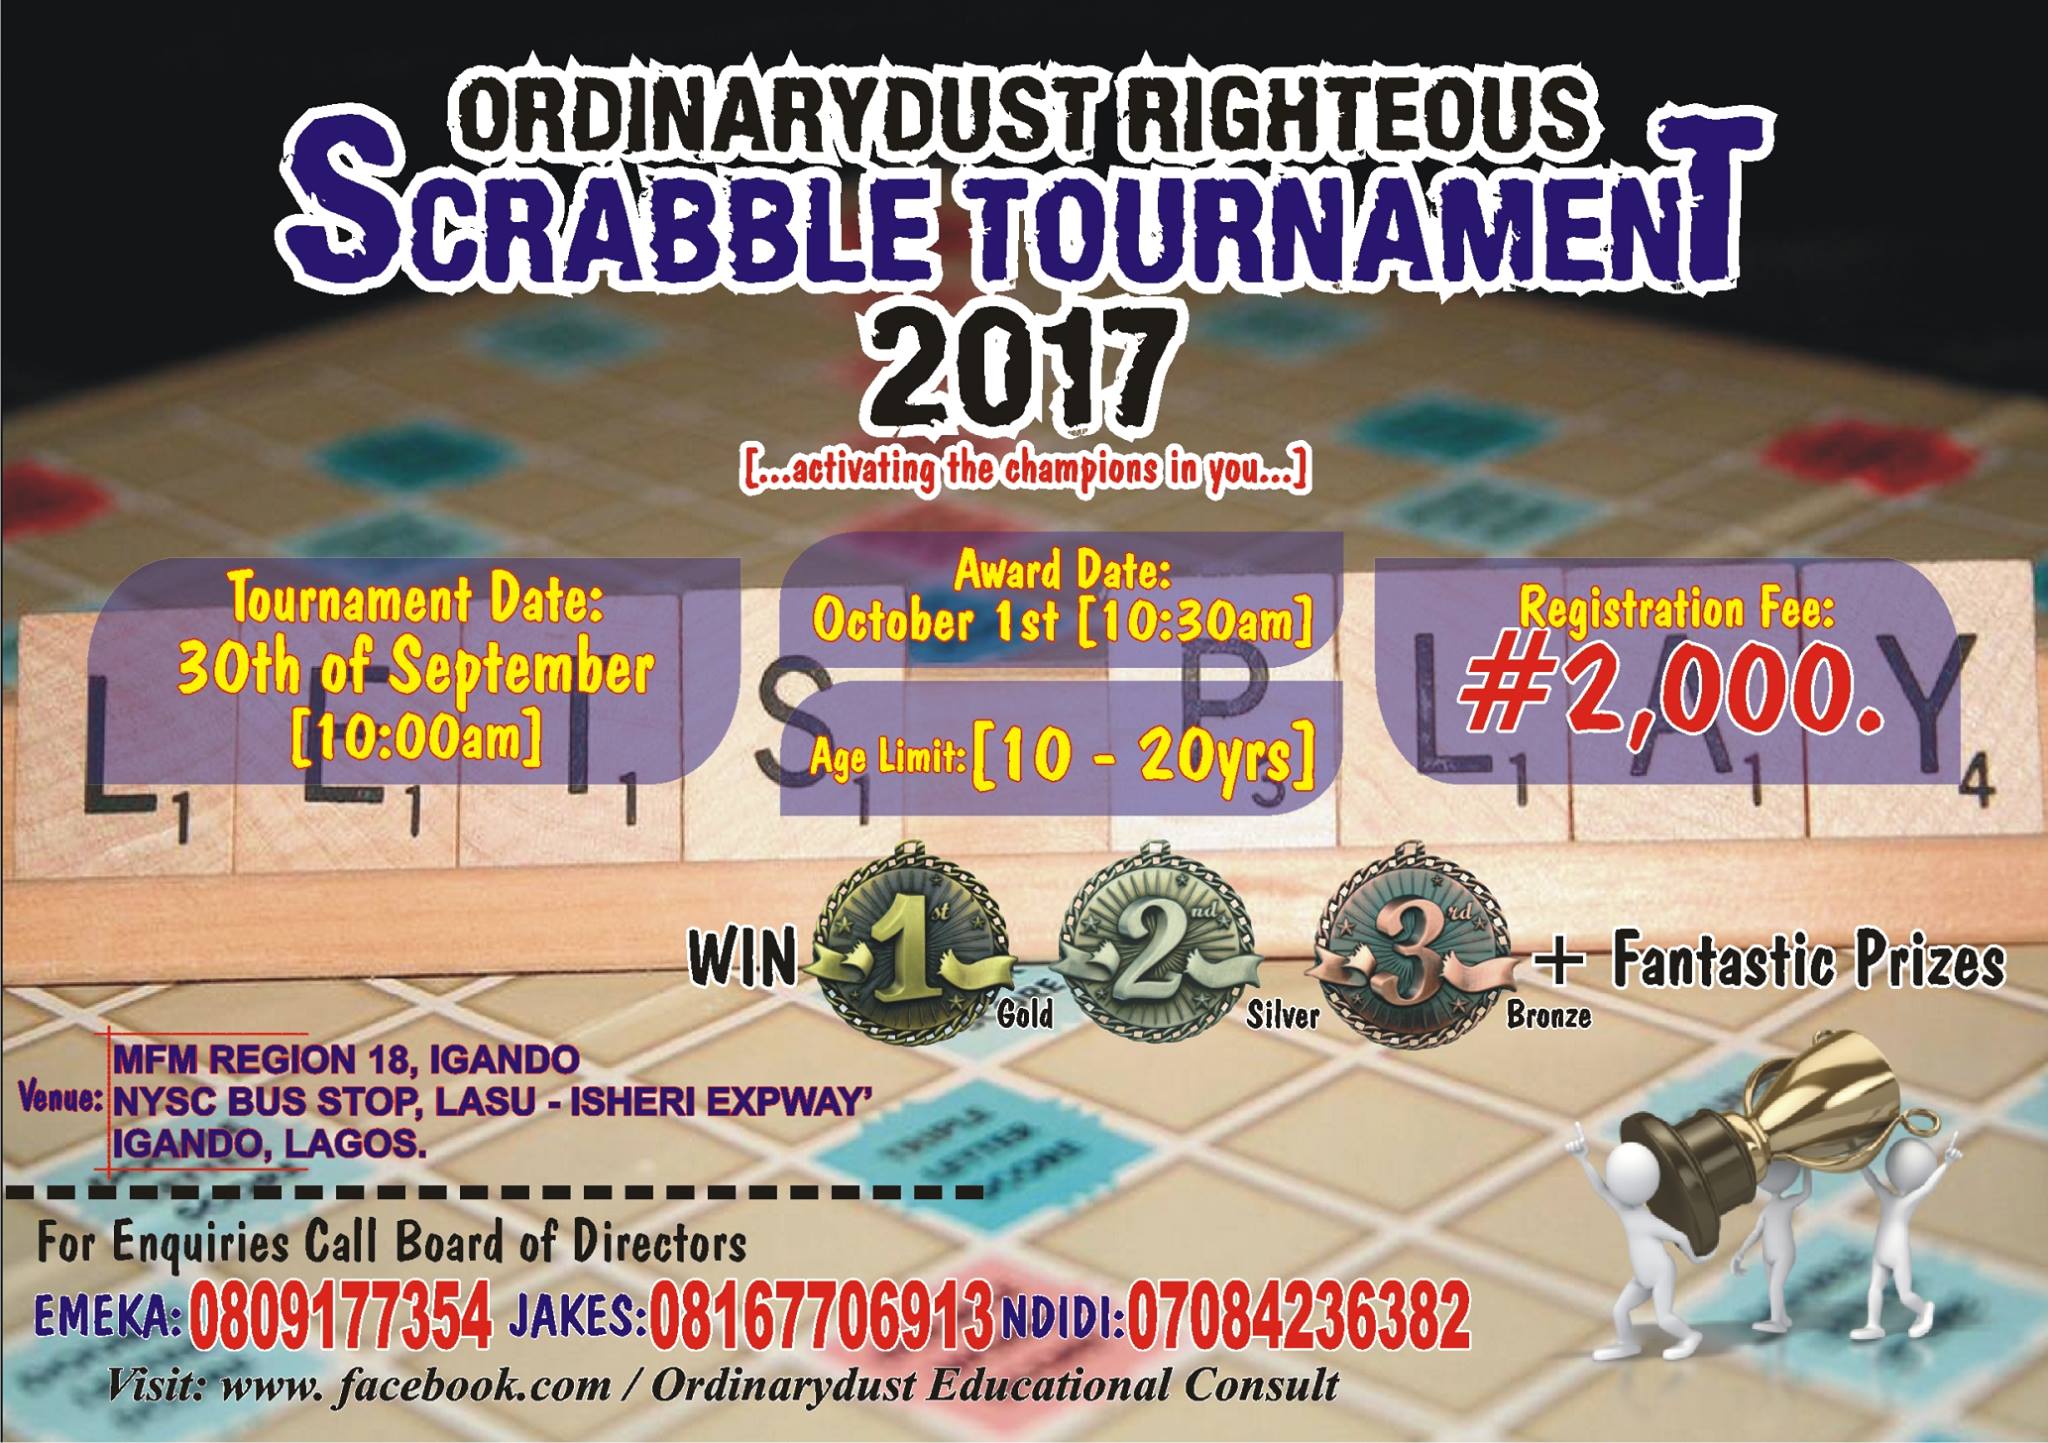 MFM Inter-Regional Scrabble Tournament